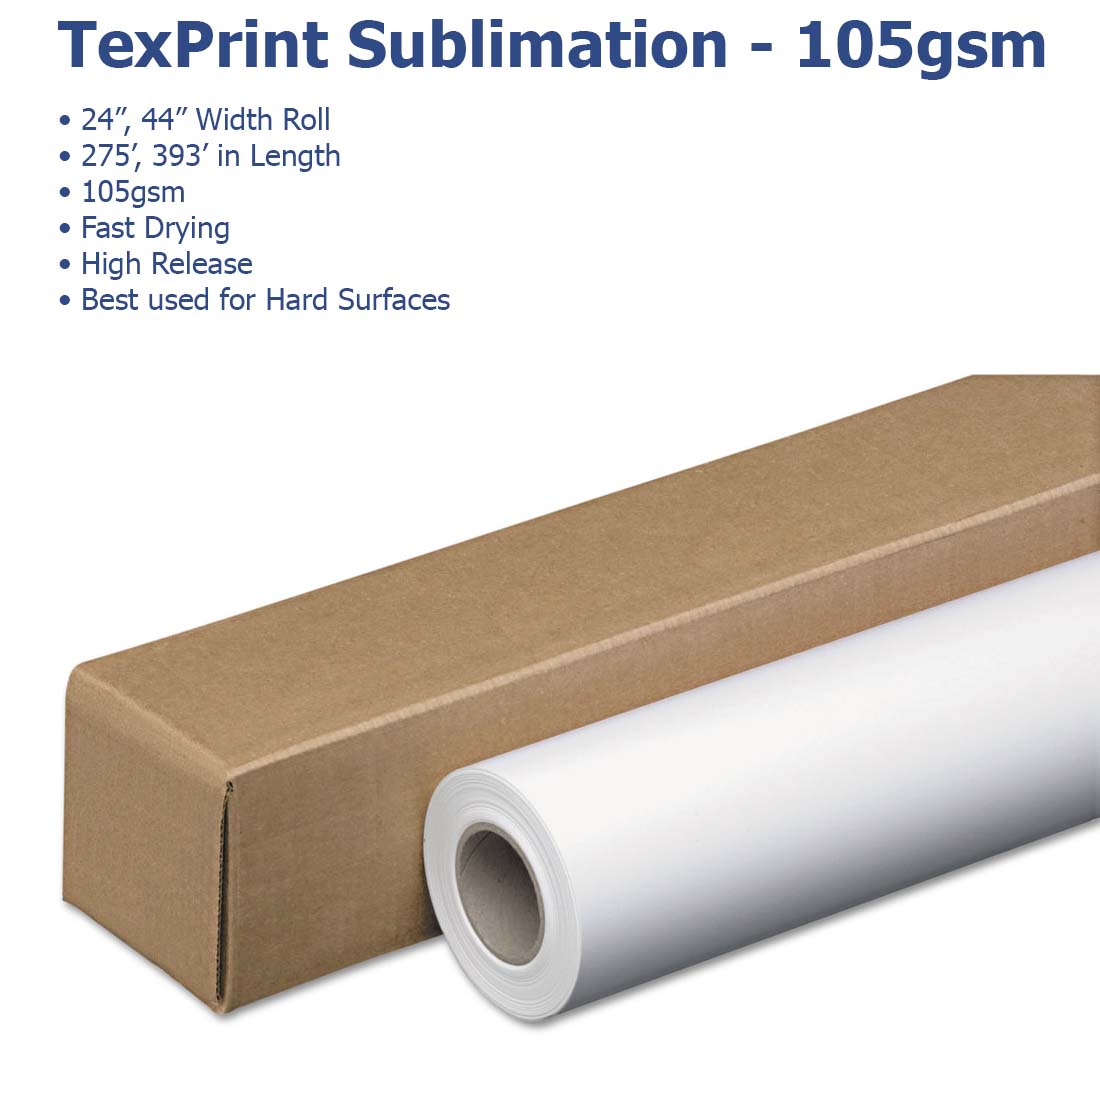 TexPrint XP - Thermo Tack - Joto Imaging Supplies Canada